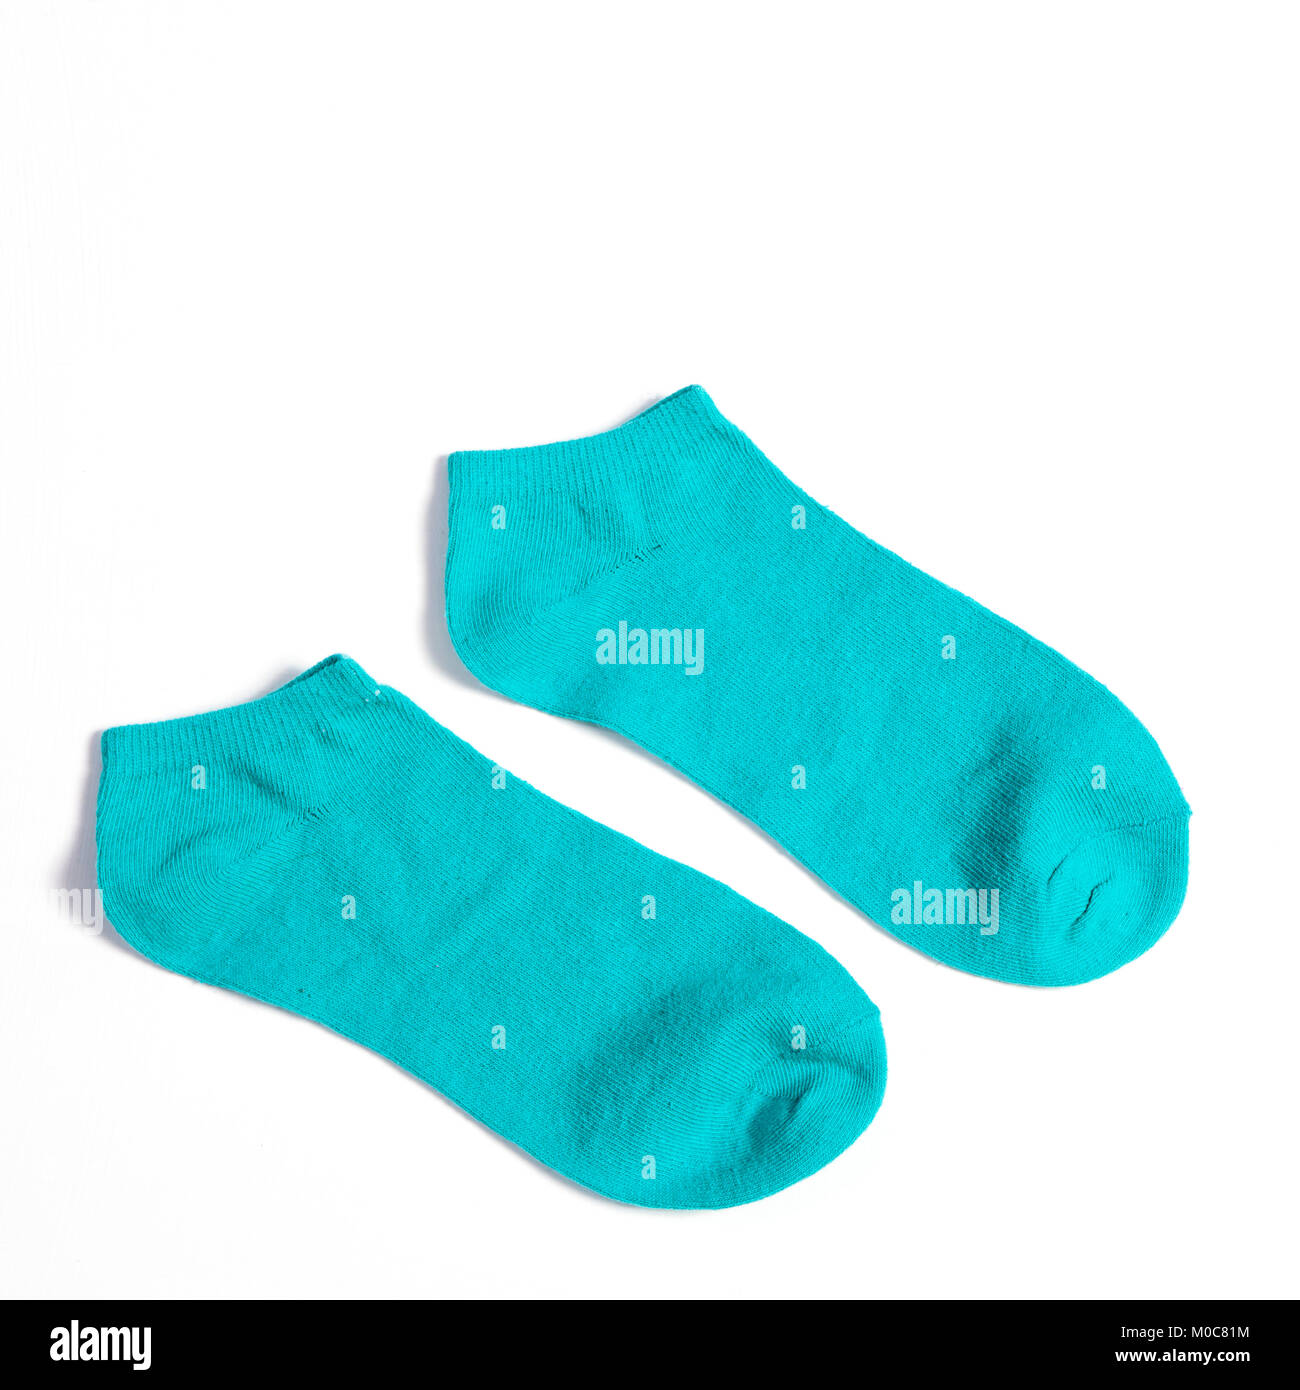 The green socks on white background Stock Photo - Alamy